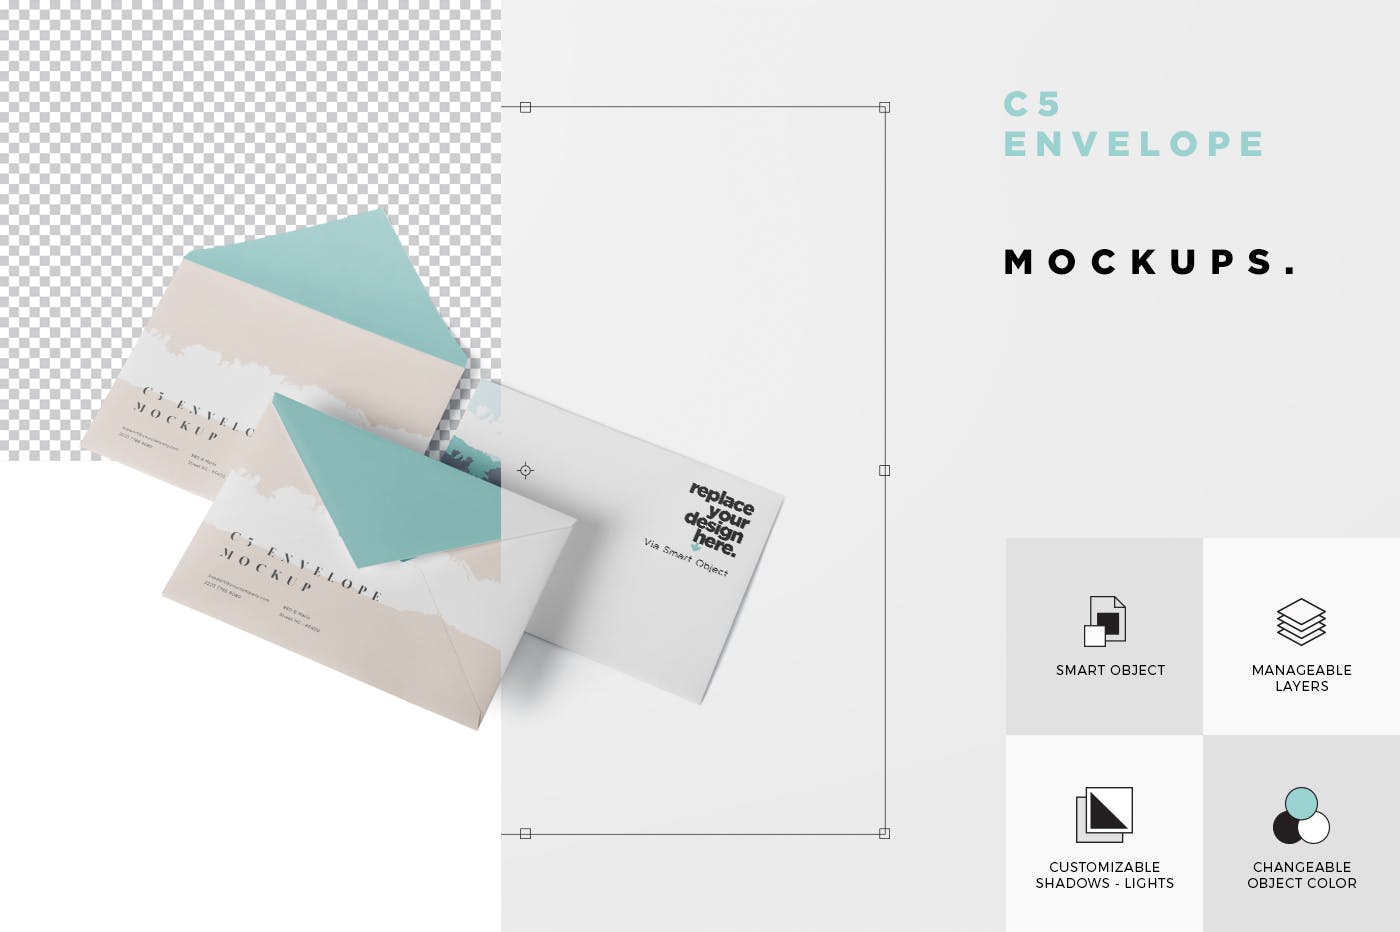 C5规格企业信封设计效果图普贤居精选 Envelope C5 Mock-Up Set插图(5)